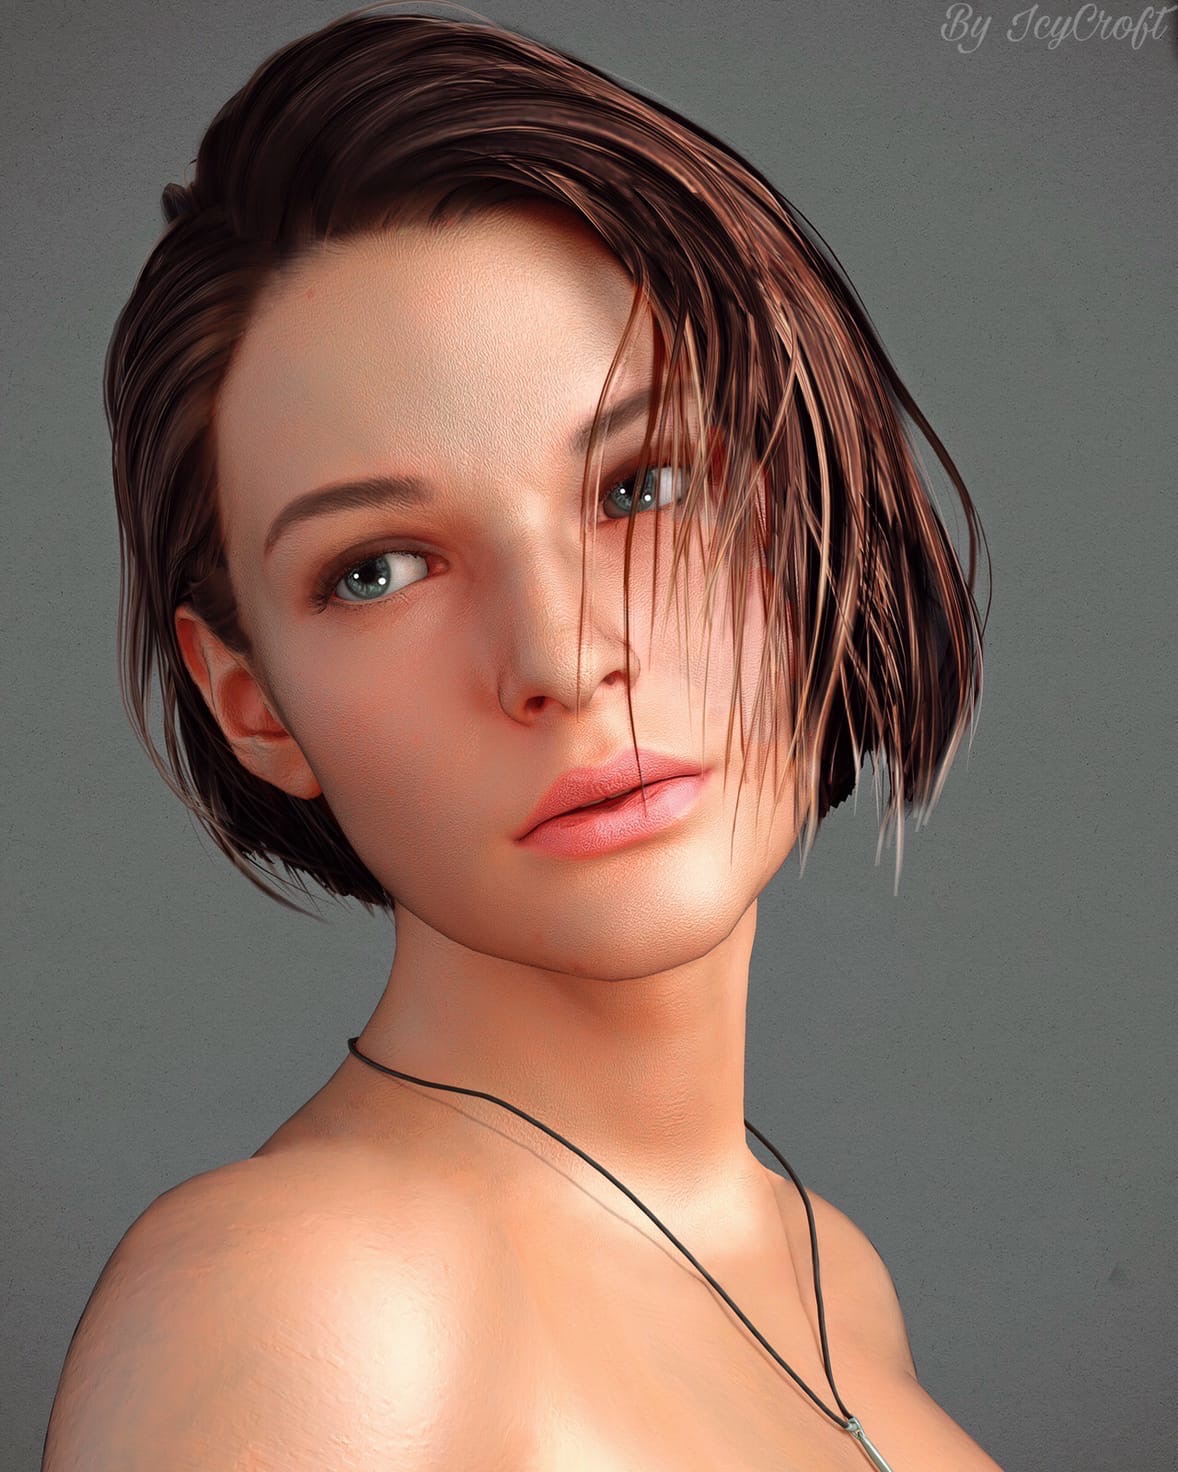 Jill Valentine 2 (Resident Evil 3 Remake) by LordHayabusa357 on DeviantArt